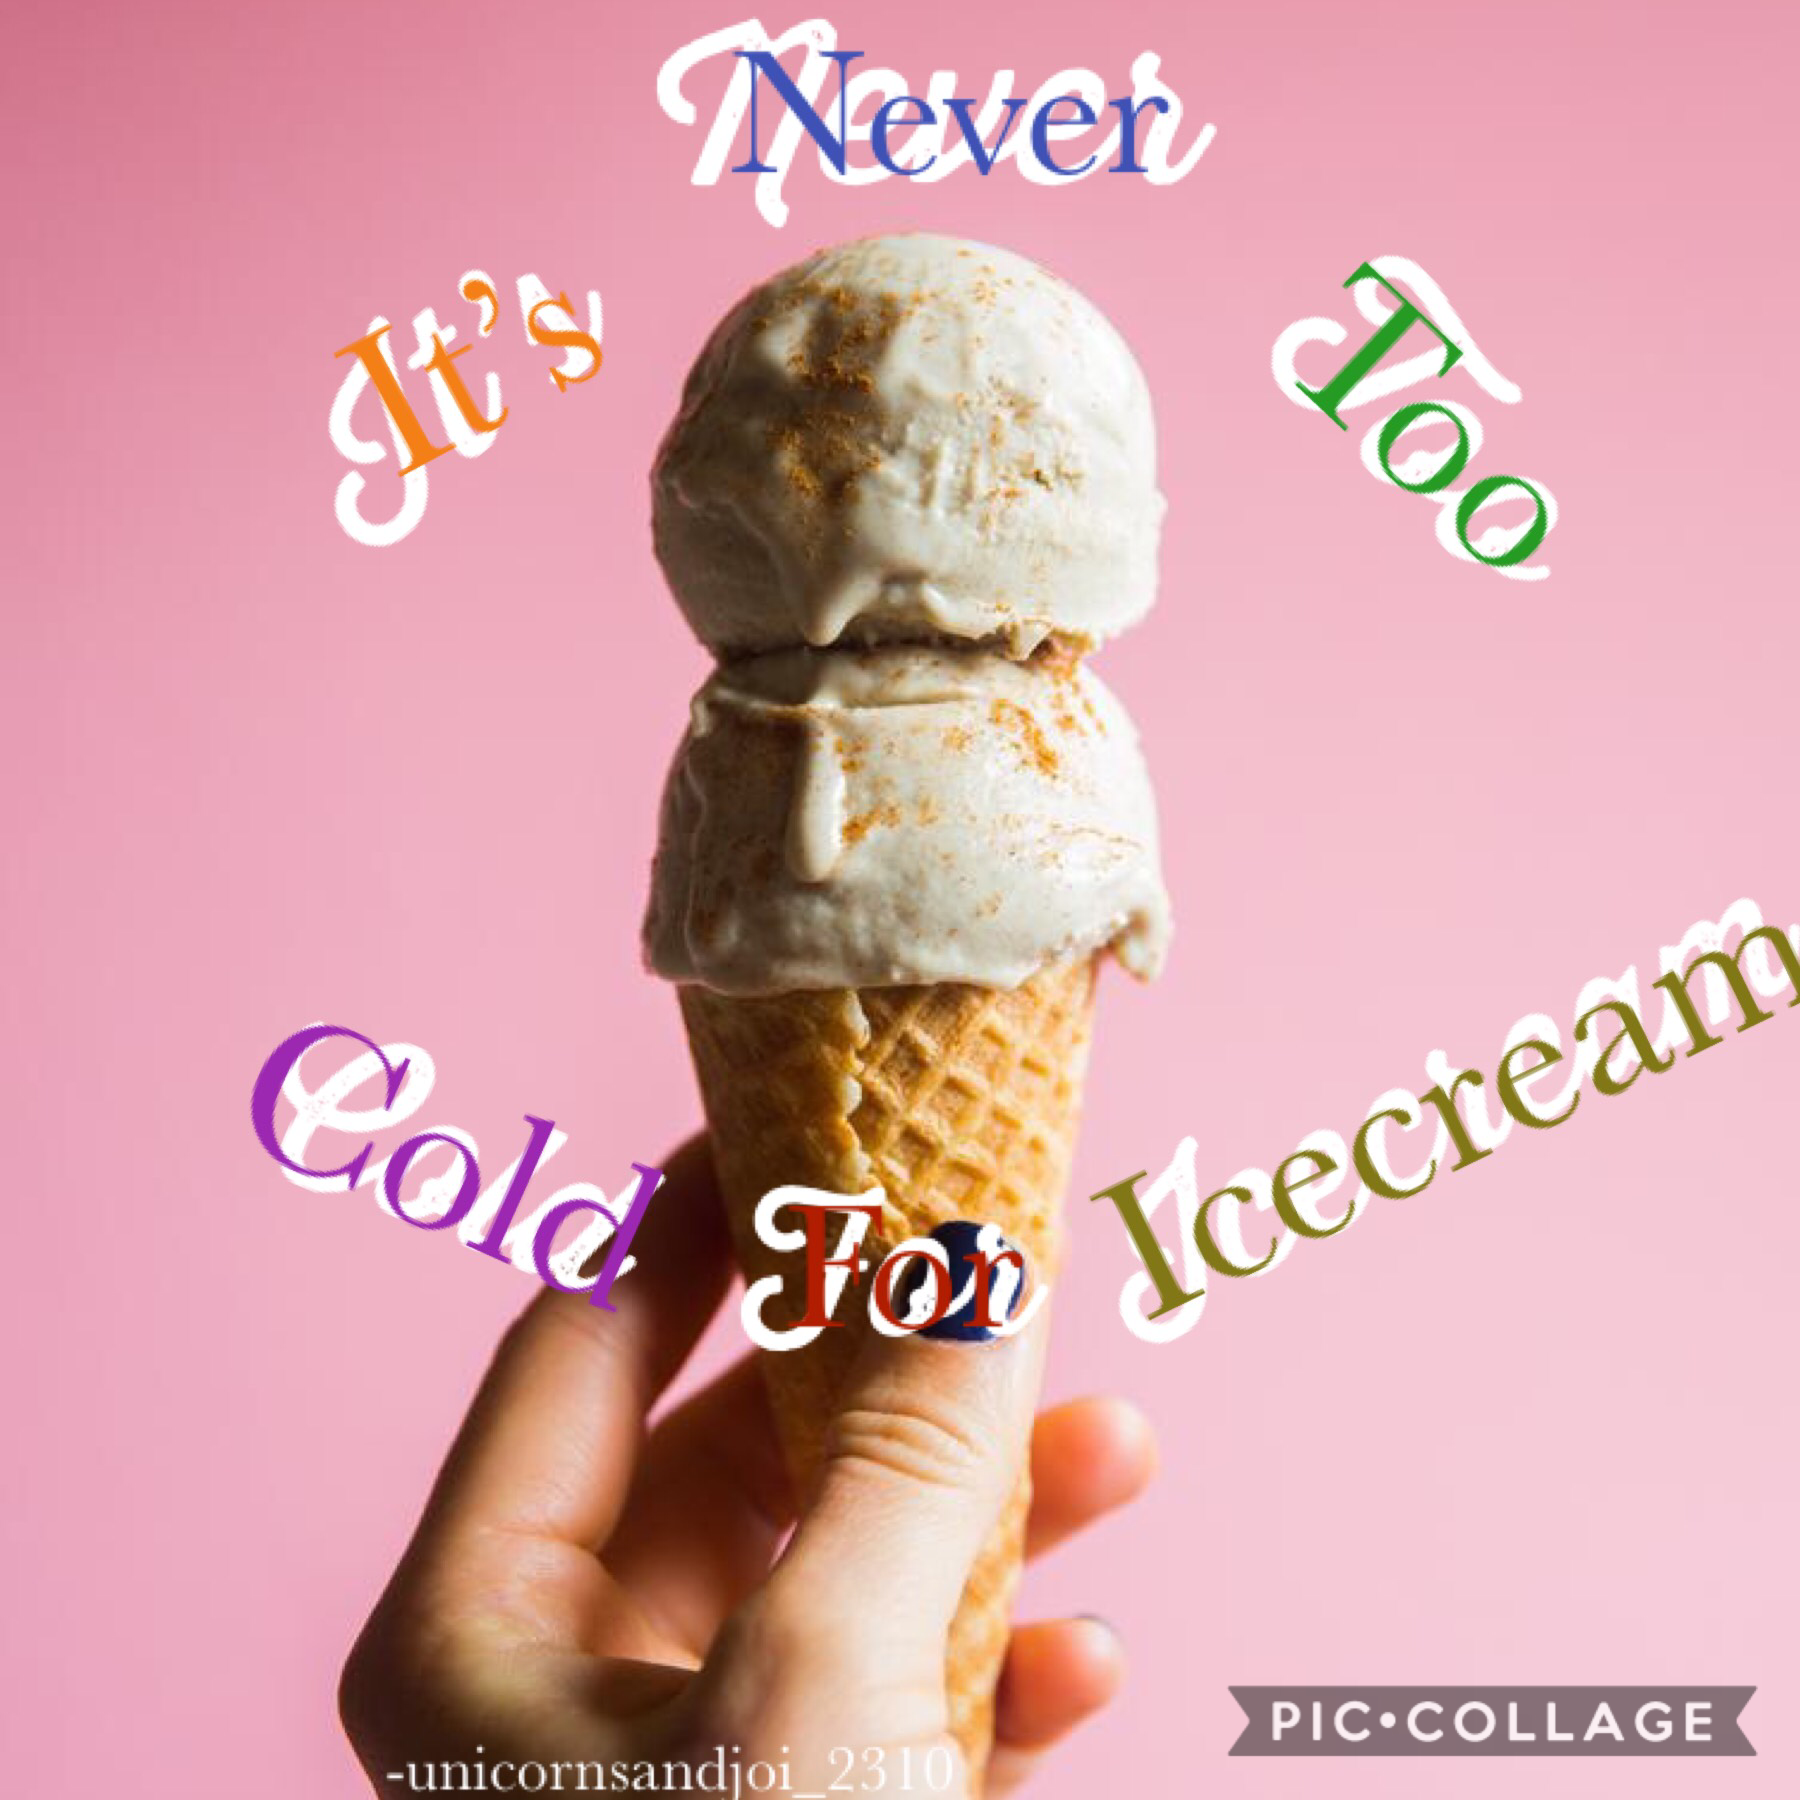 It’s Never Too Cold For Icecream
-unicornsandjoi_2310